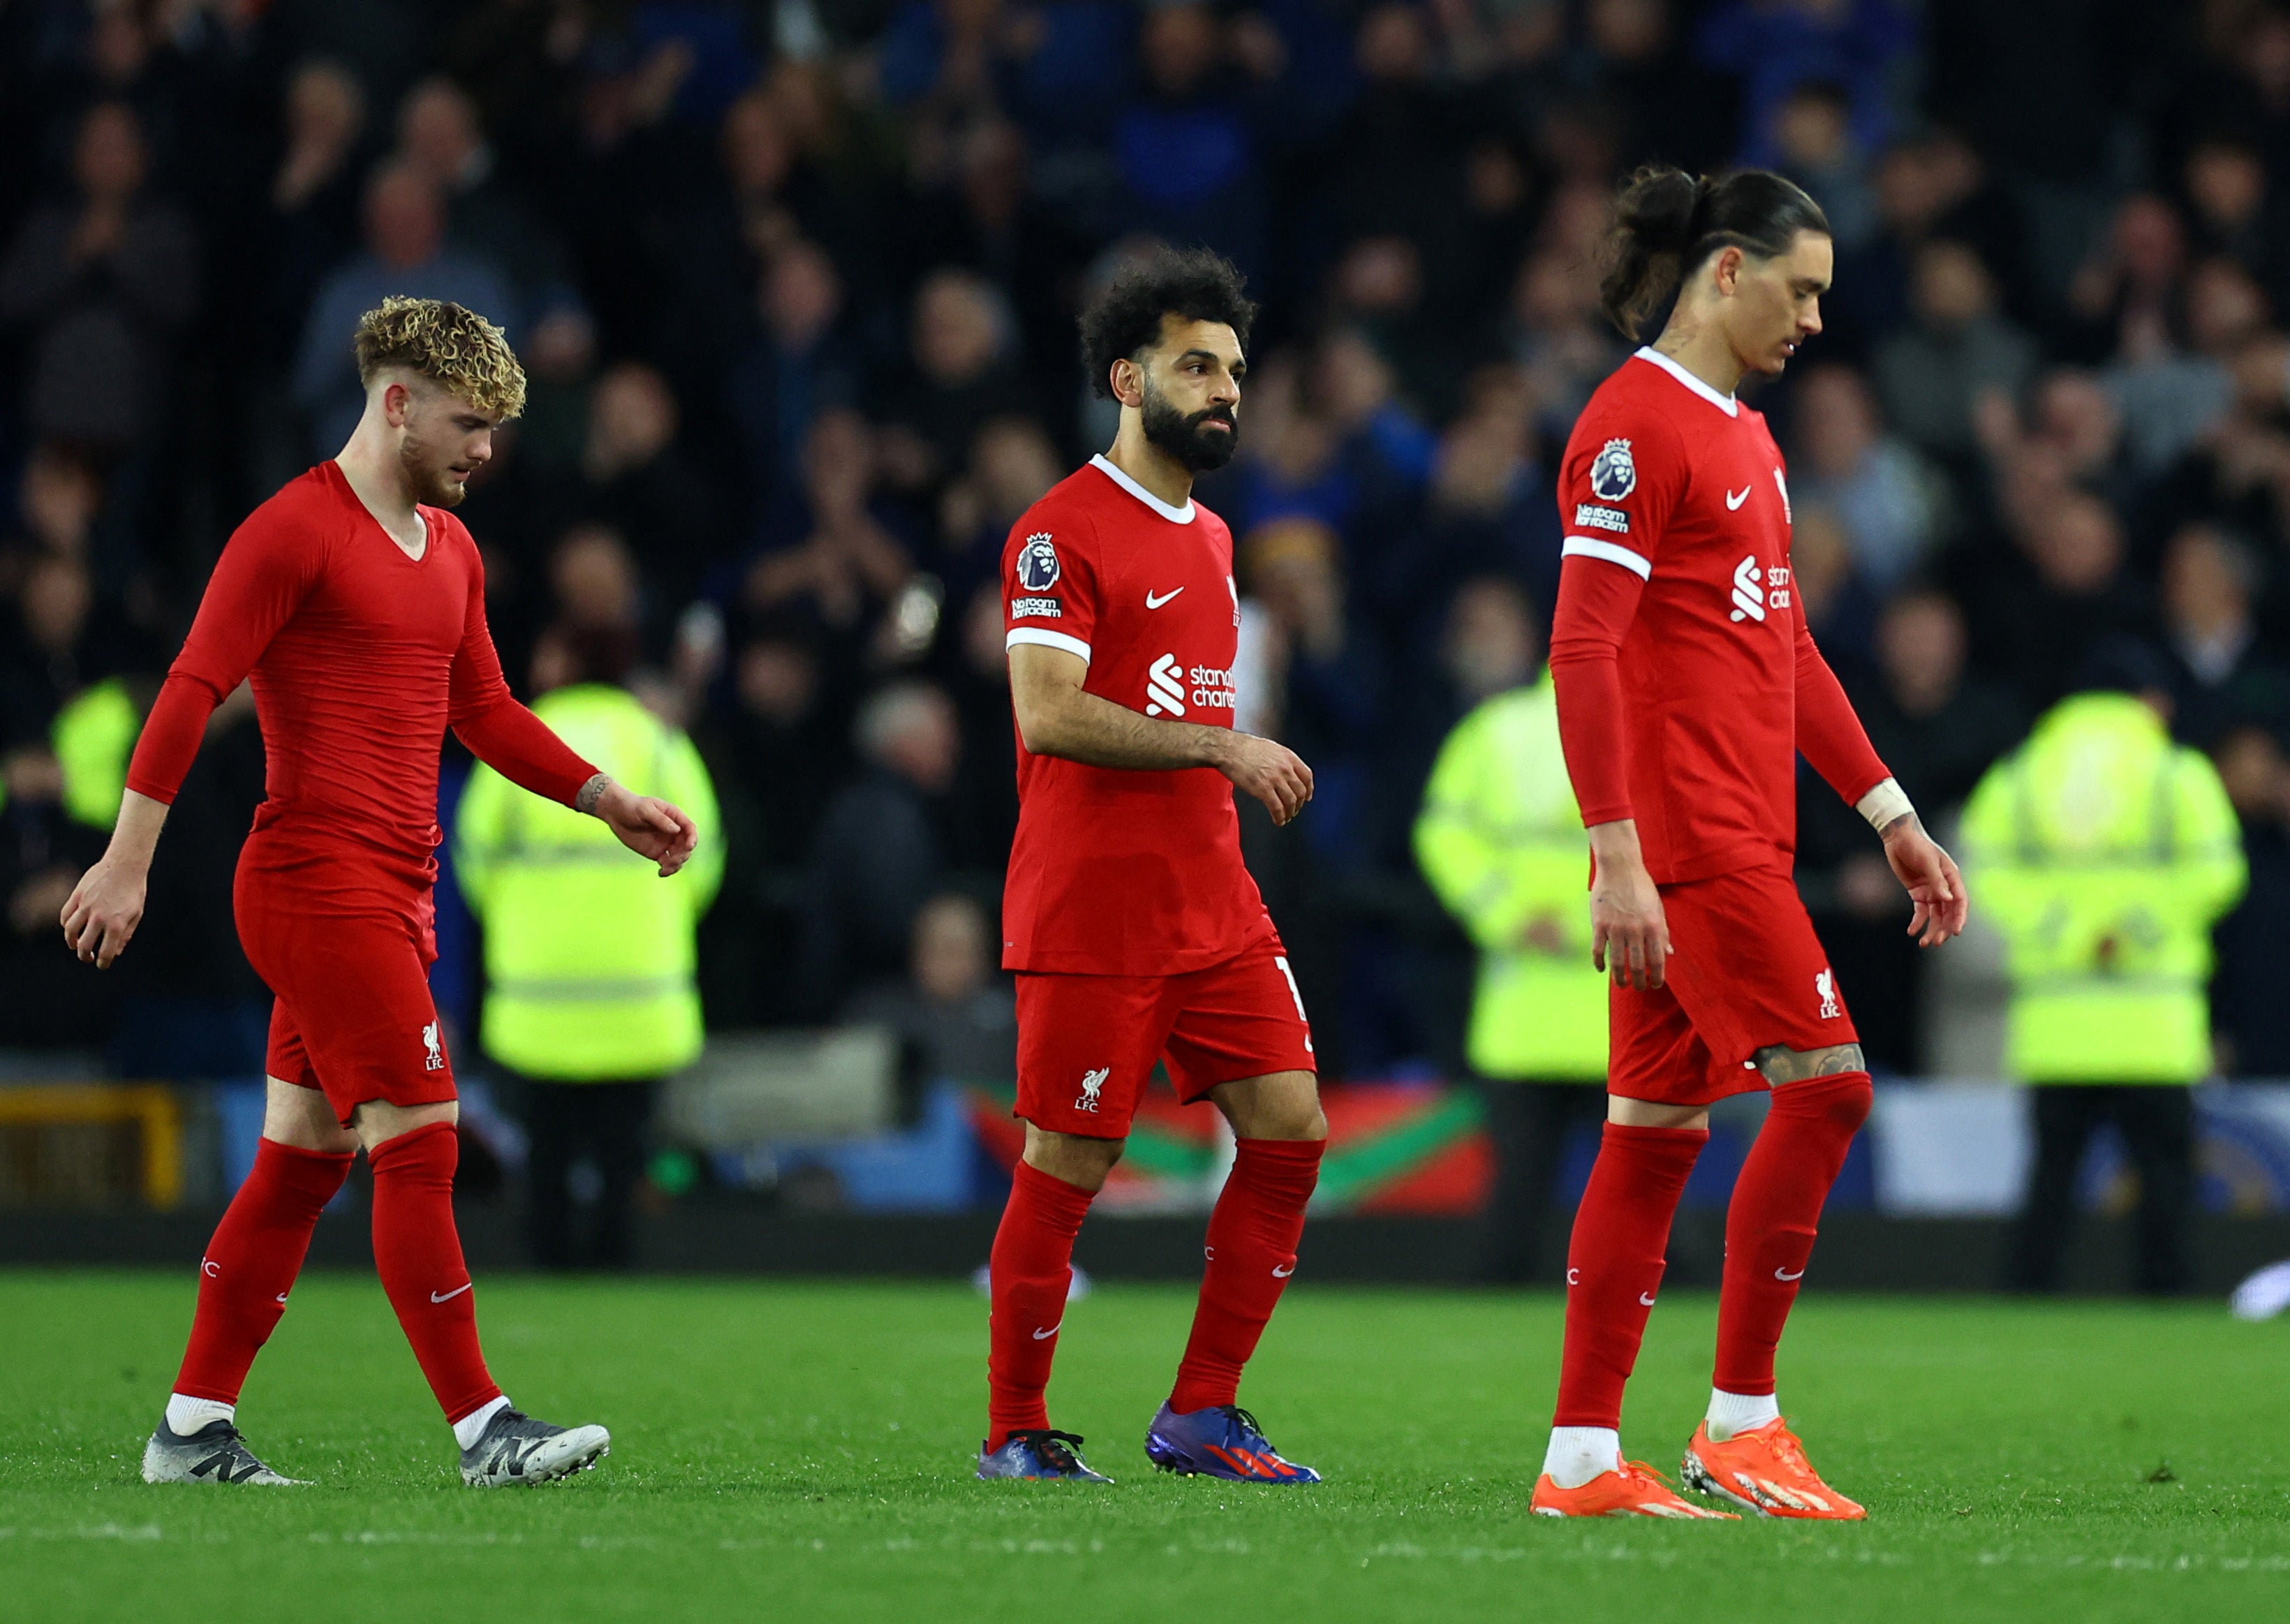 Darwin Nunez and Mo Salah missed chances against Everton